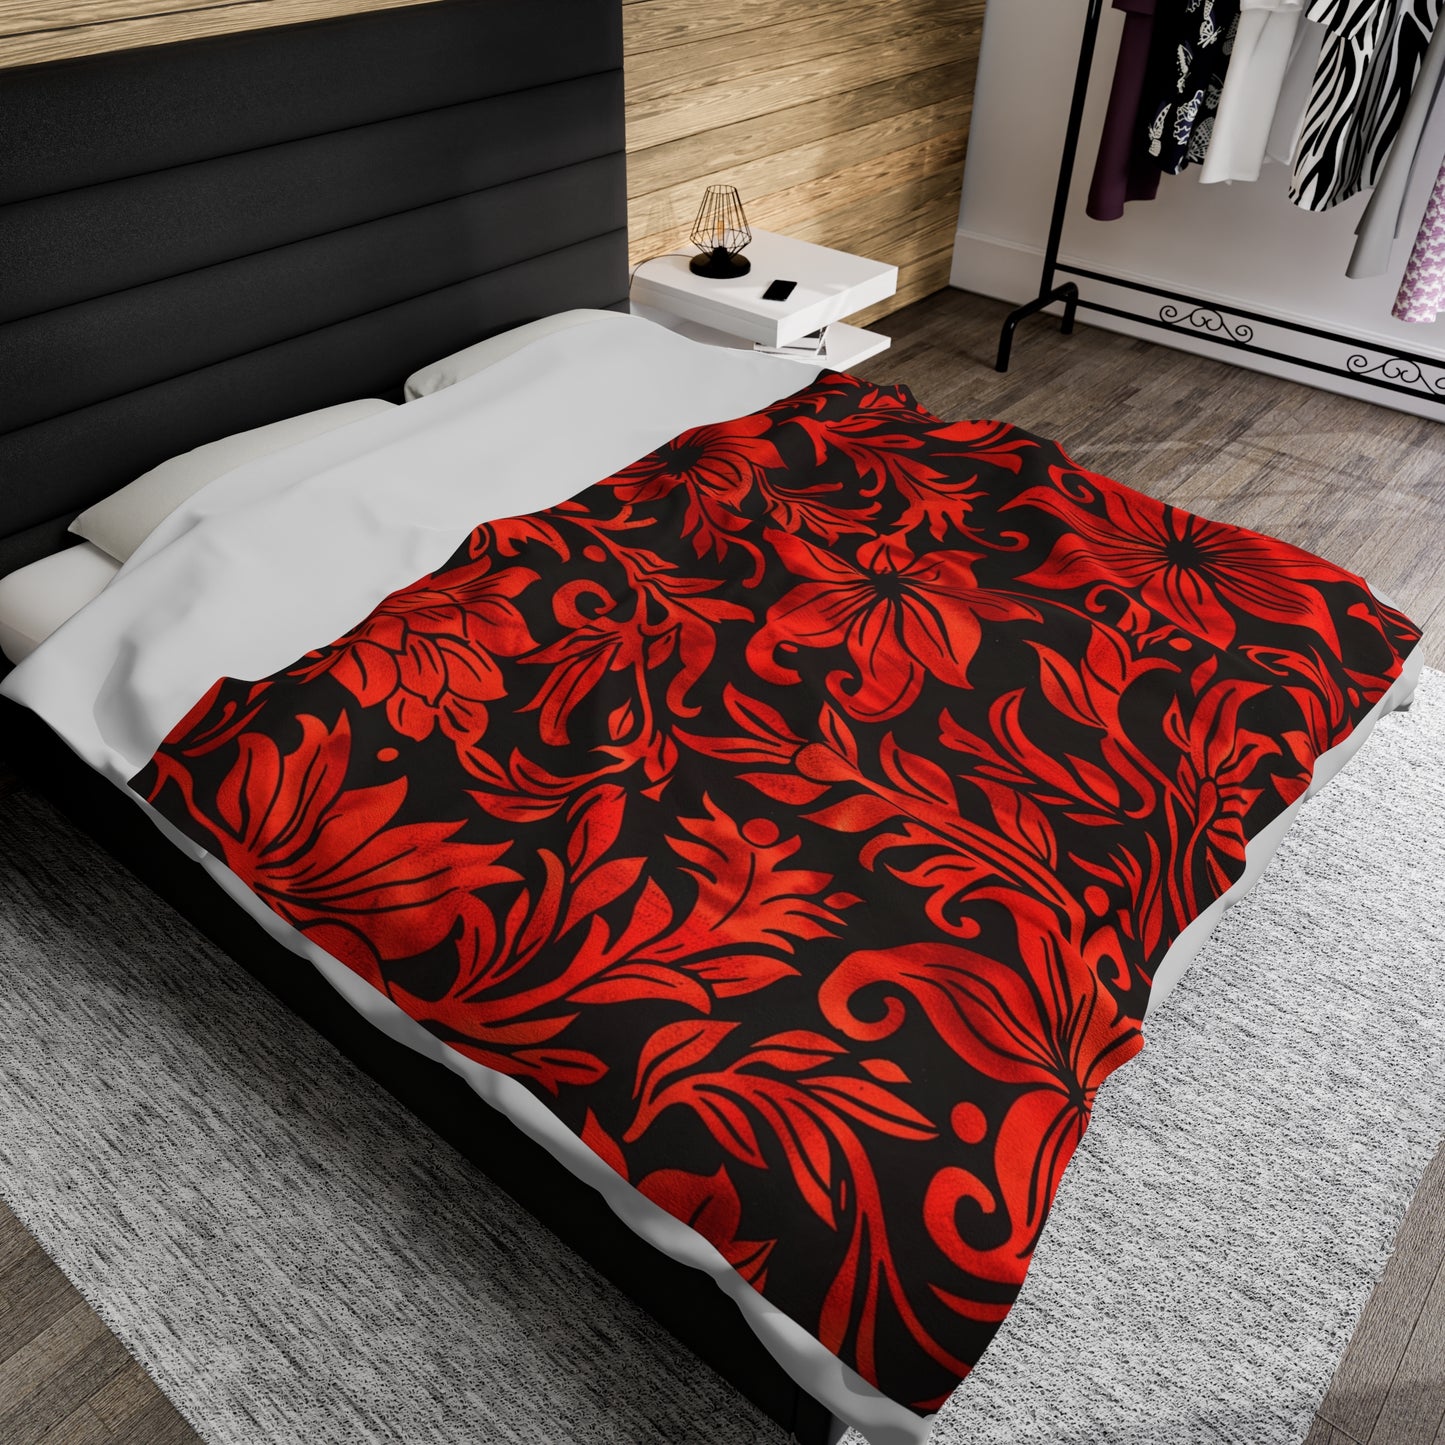 Crimson Contrast Striking Red and Black Floral Elegance Velveteen Fleece Throw Blanket